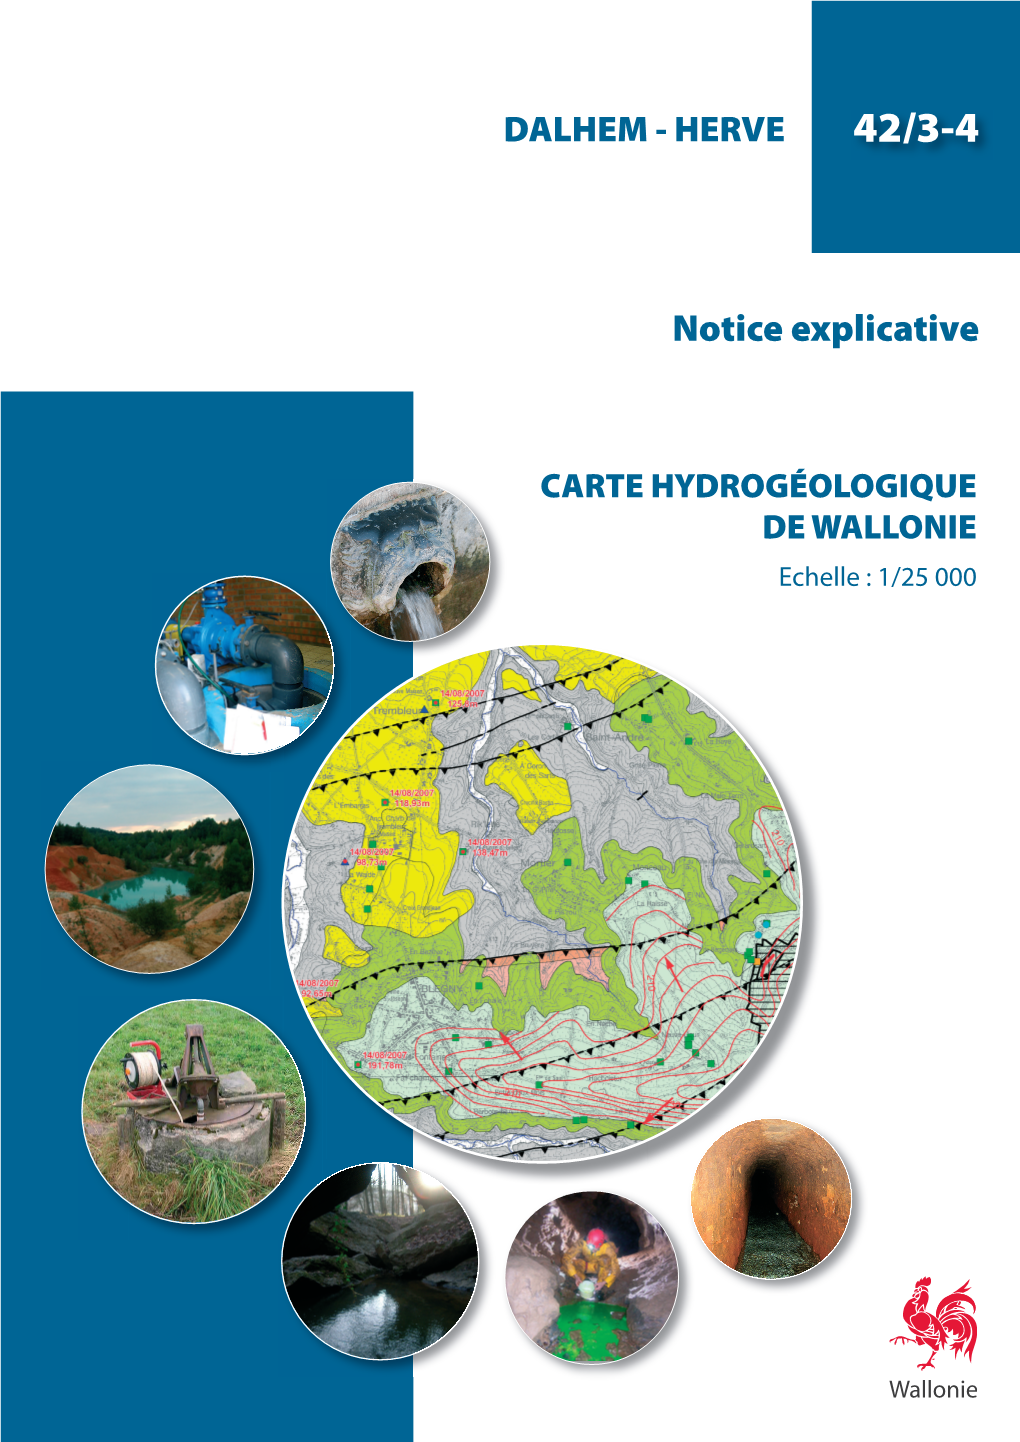 Carte Hydrogéologique De Dalhem - Herve DALHEM - HERVE